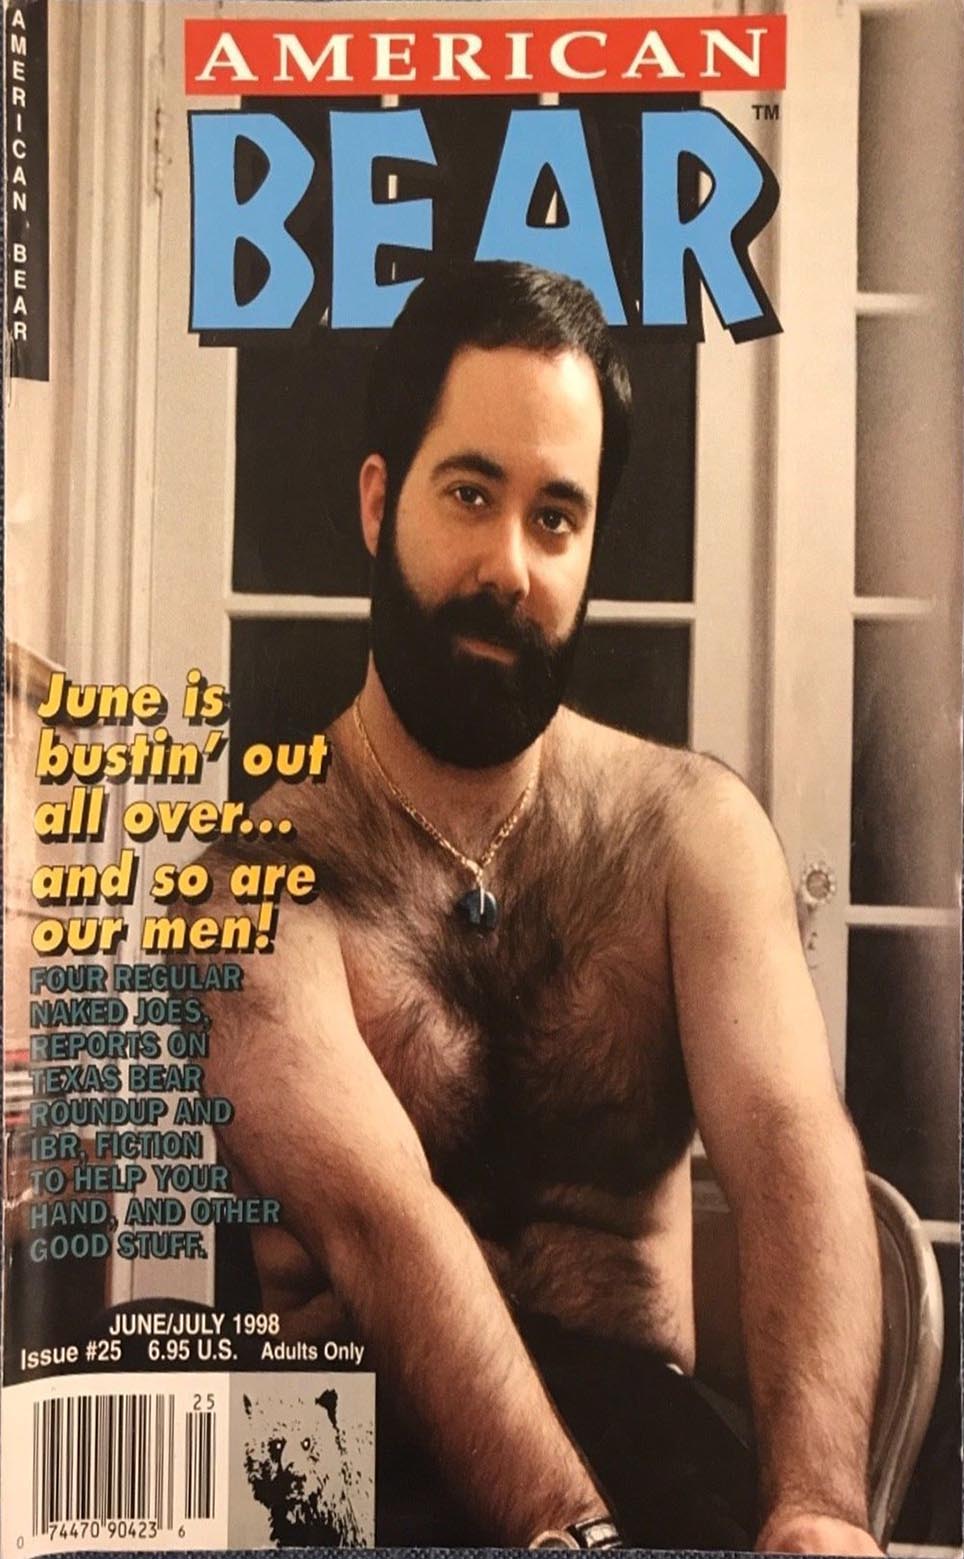 American Bear June 1998 magazine back issue American Bear magizine back copy 